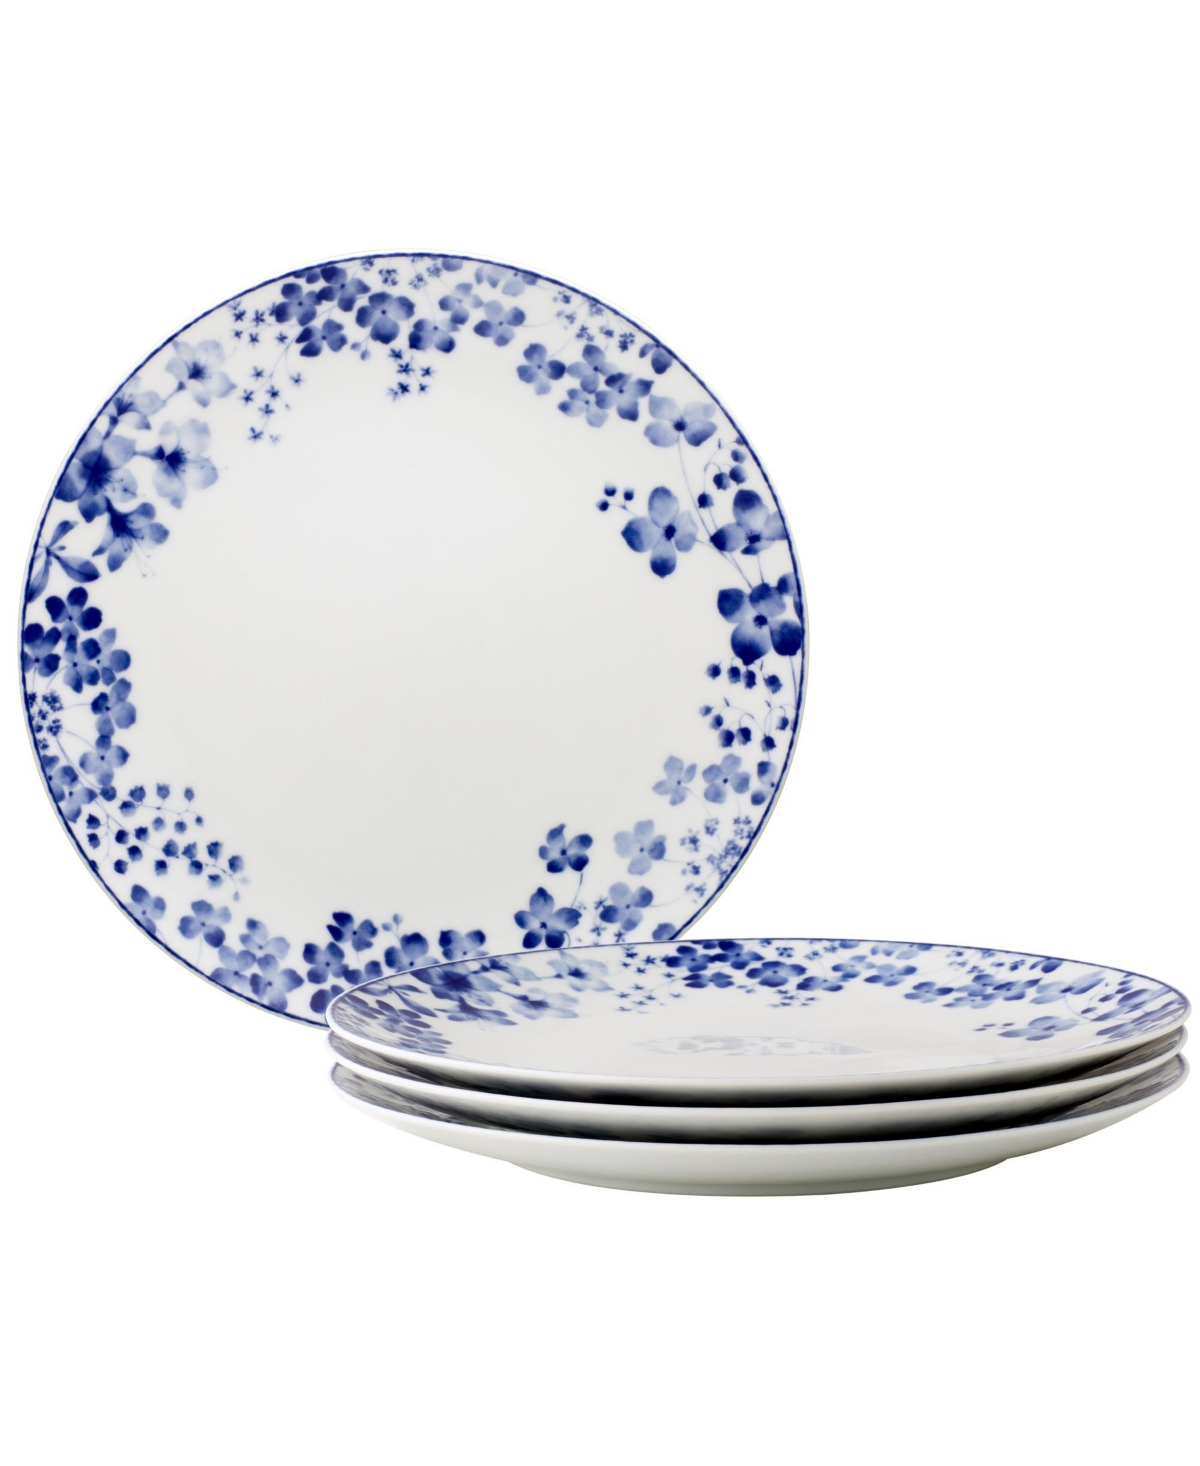 Bloomington Road Set of 4 Dinner Plates, 10 1/2" - White/blue